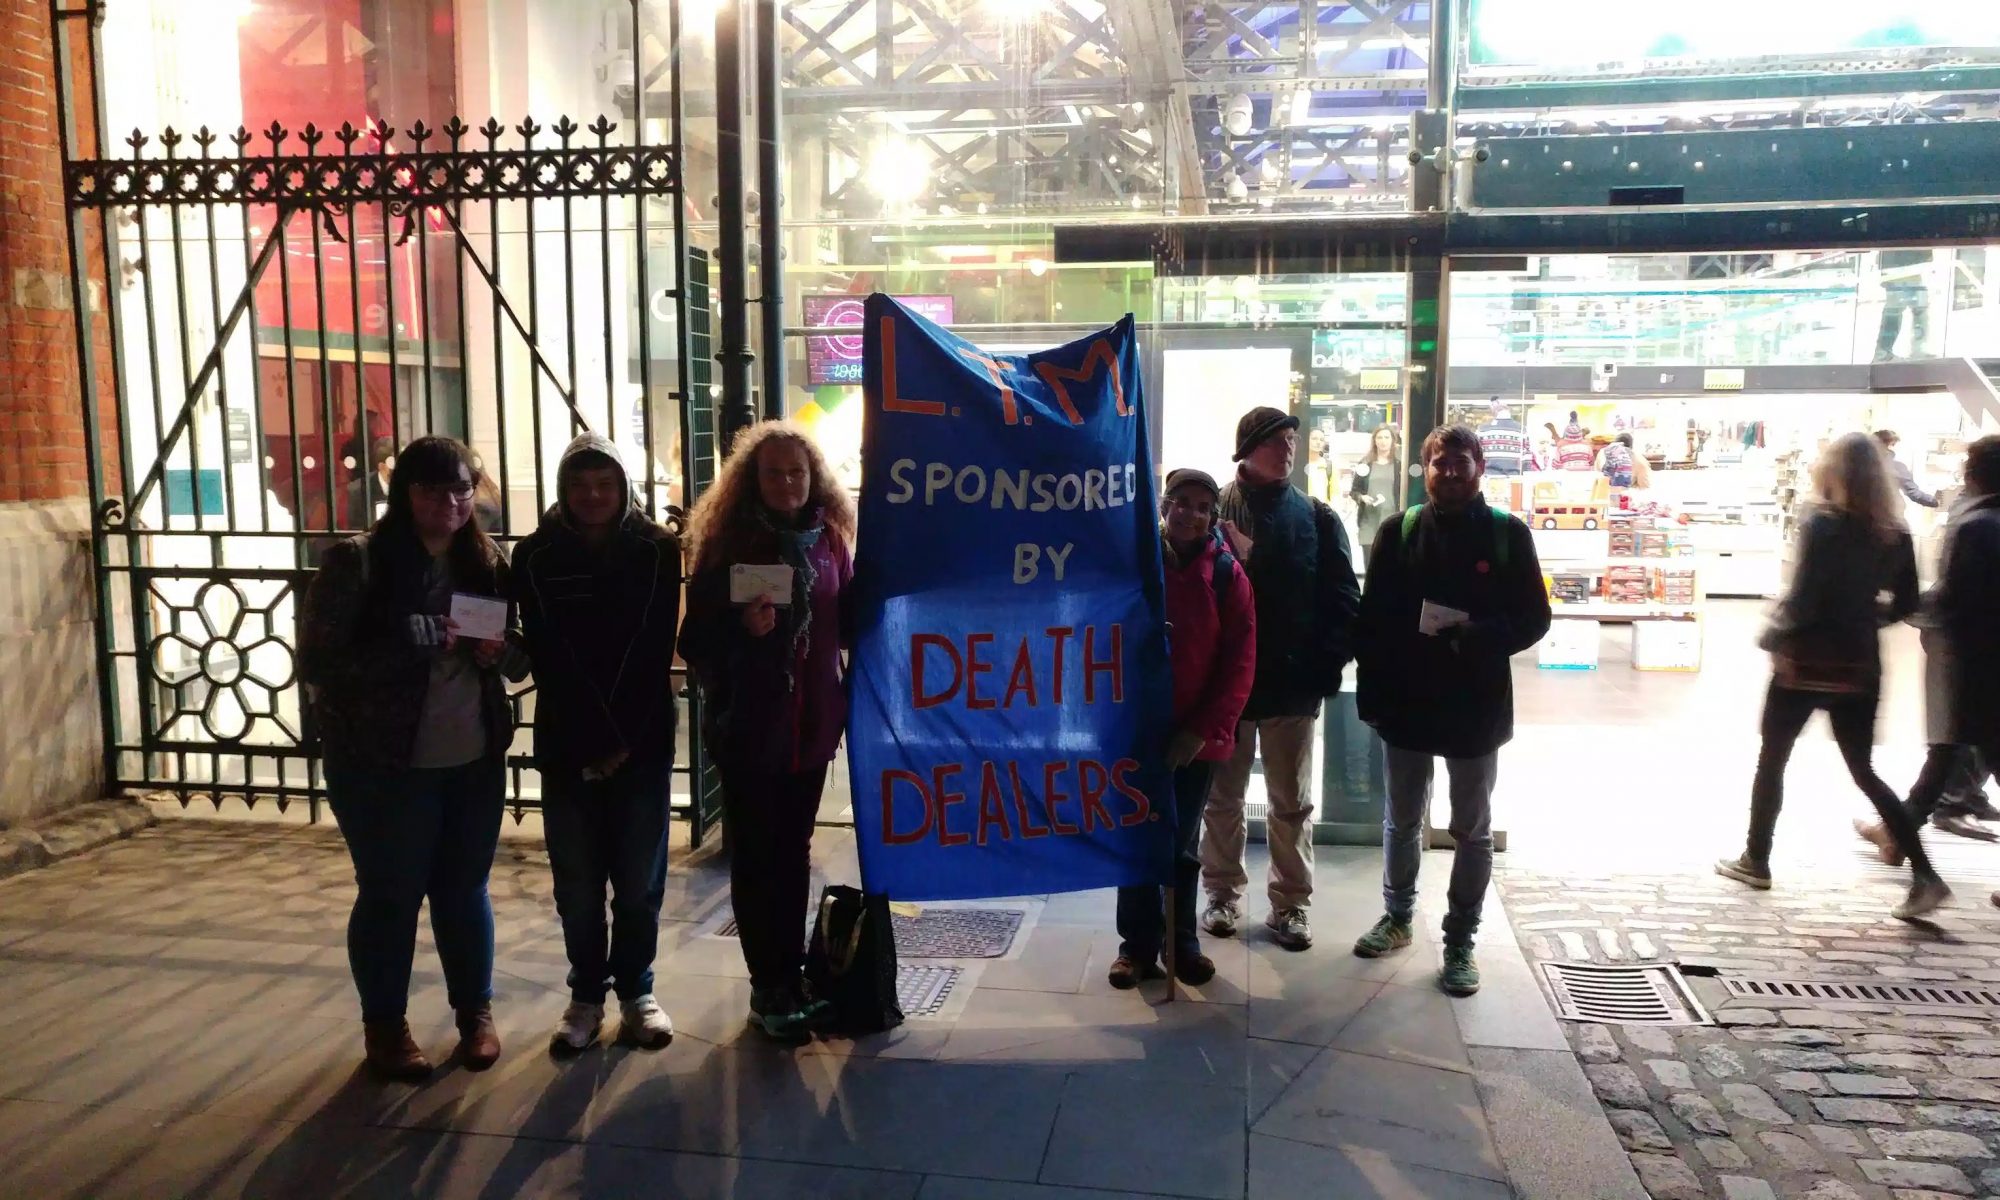 Activists hold banner 'LTM Sponsered by Death Dealers' outside transport museum